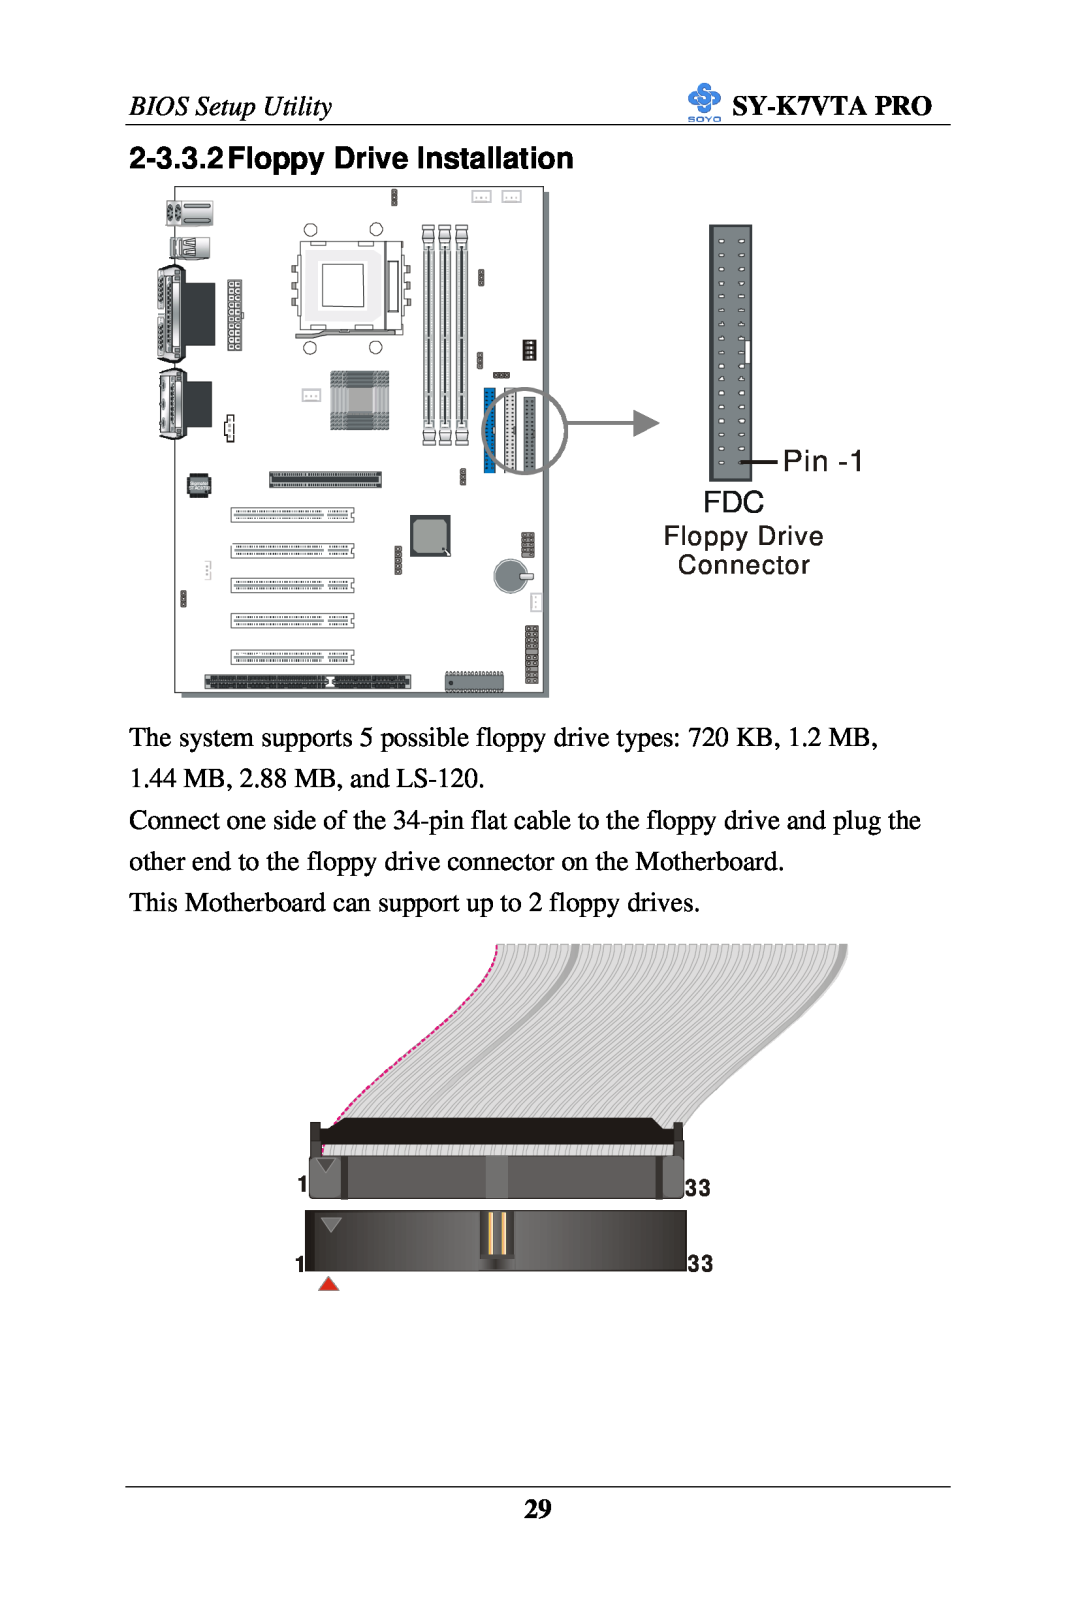 SOYO SY-K7VTA PRO user manual Floppy Drive Installation, Floppy Drive Connector, BIOS Setup Utility 